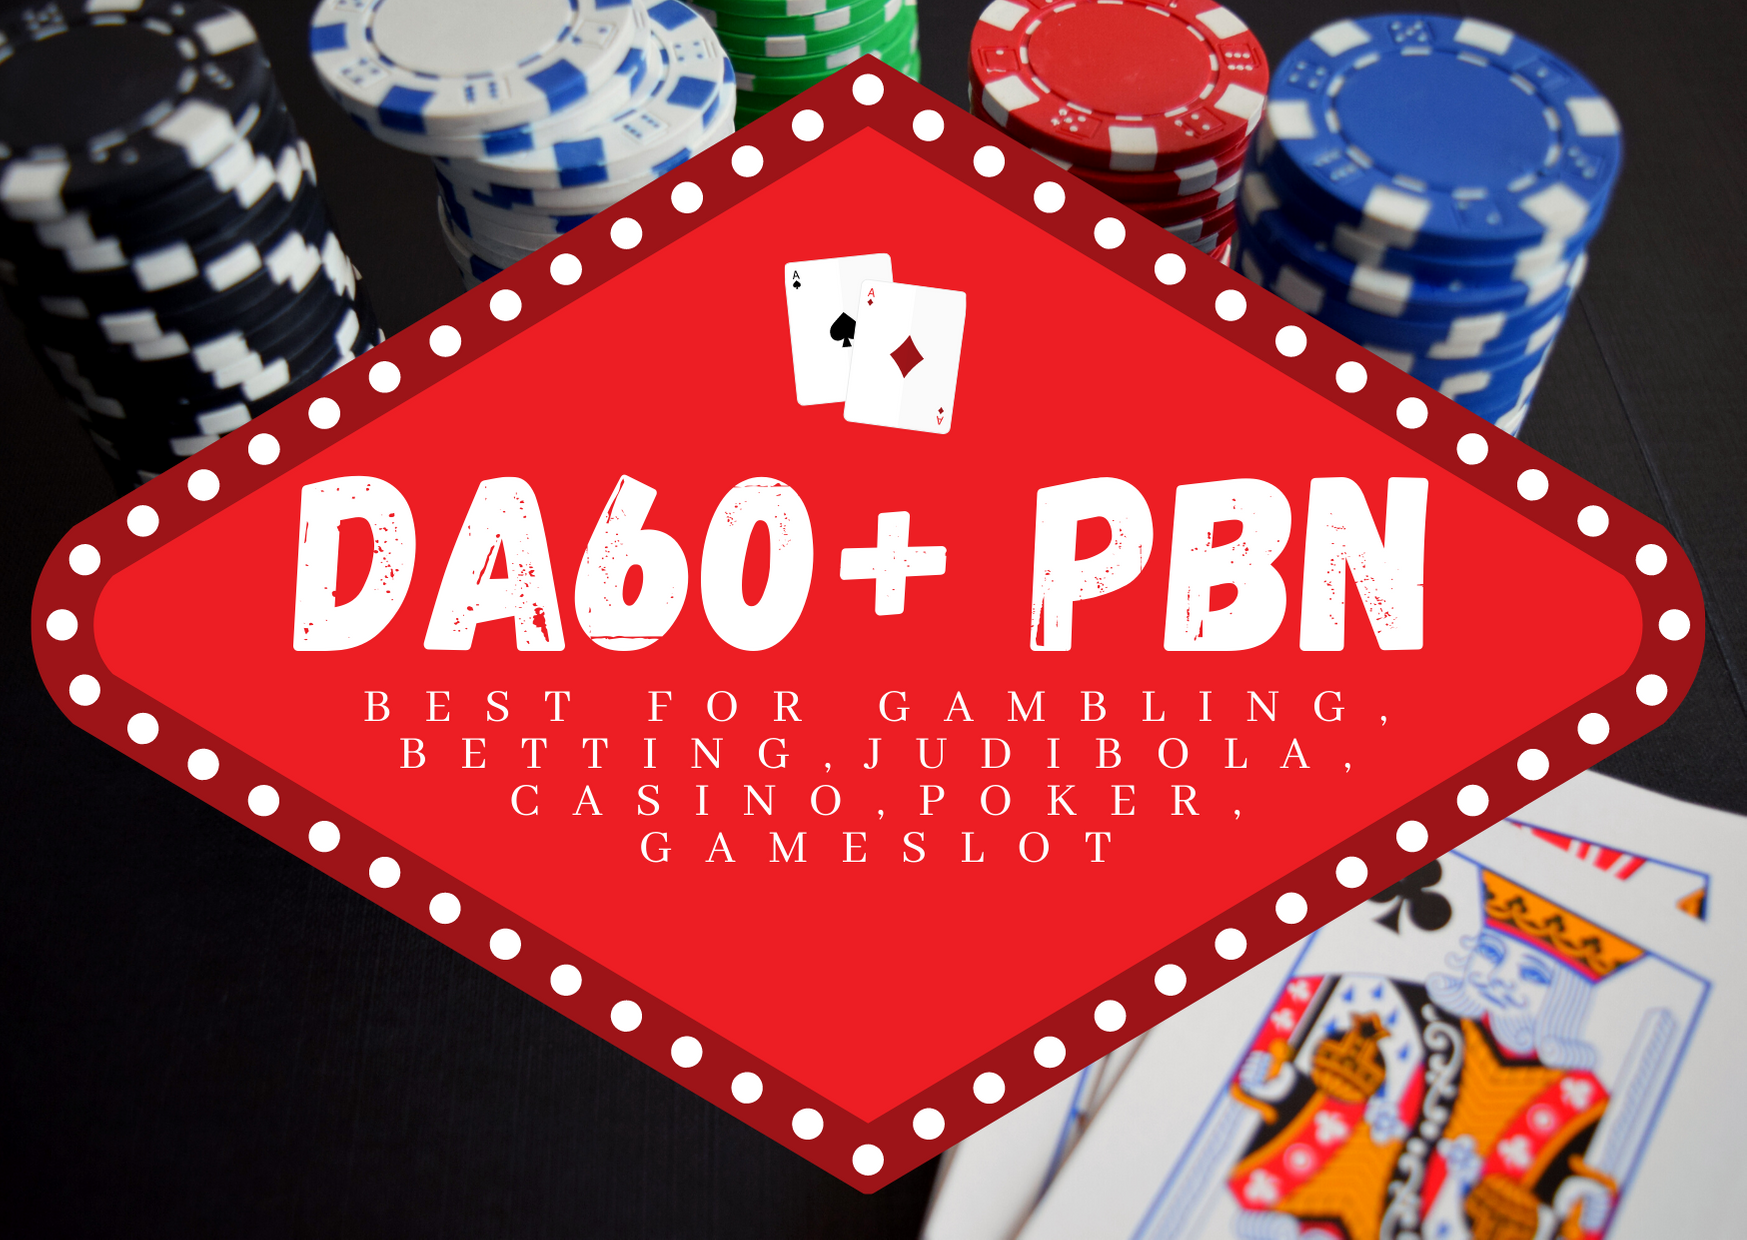 Thai-Korean-Indonesia 30 PBN DA60 To75+ BACKLINKS Casino Gambling UFABET Related backlink